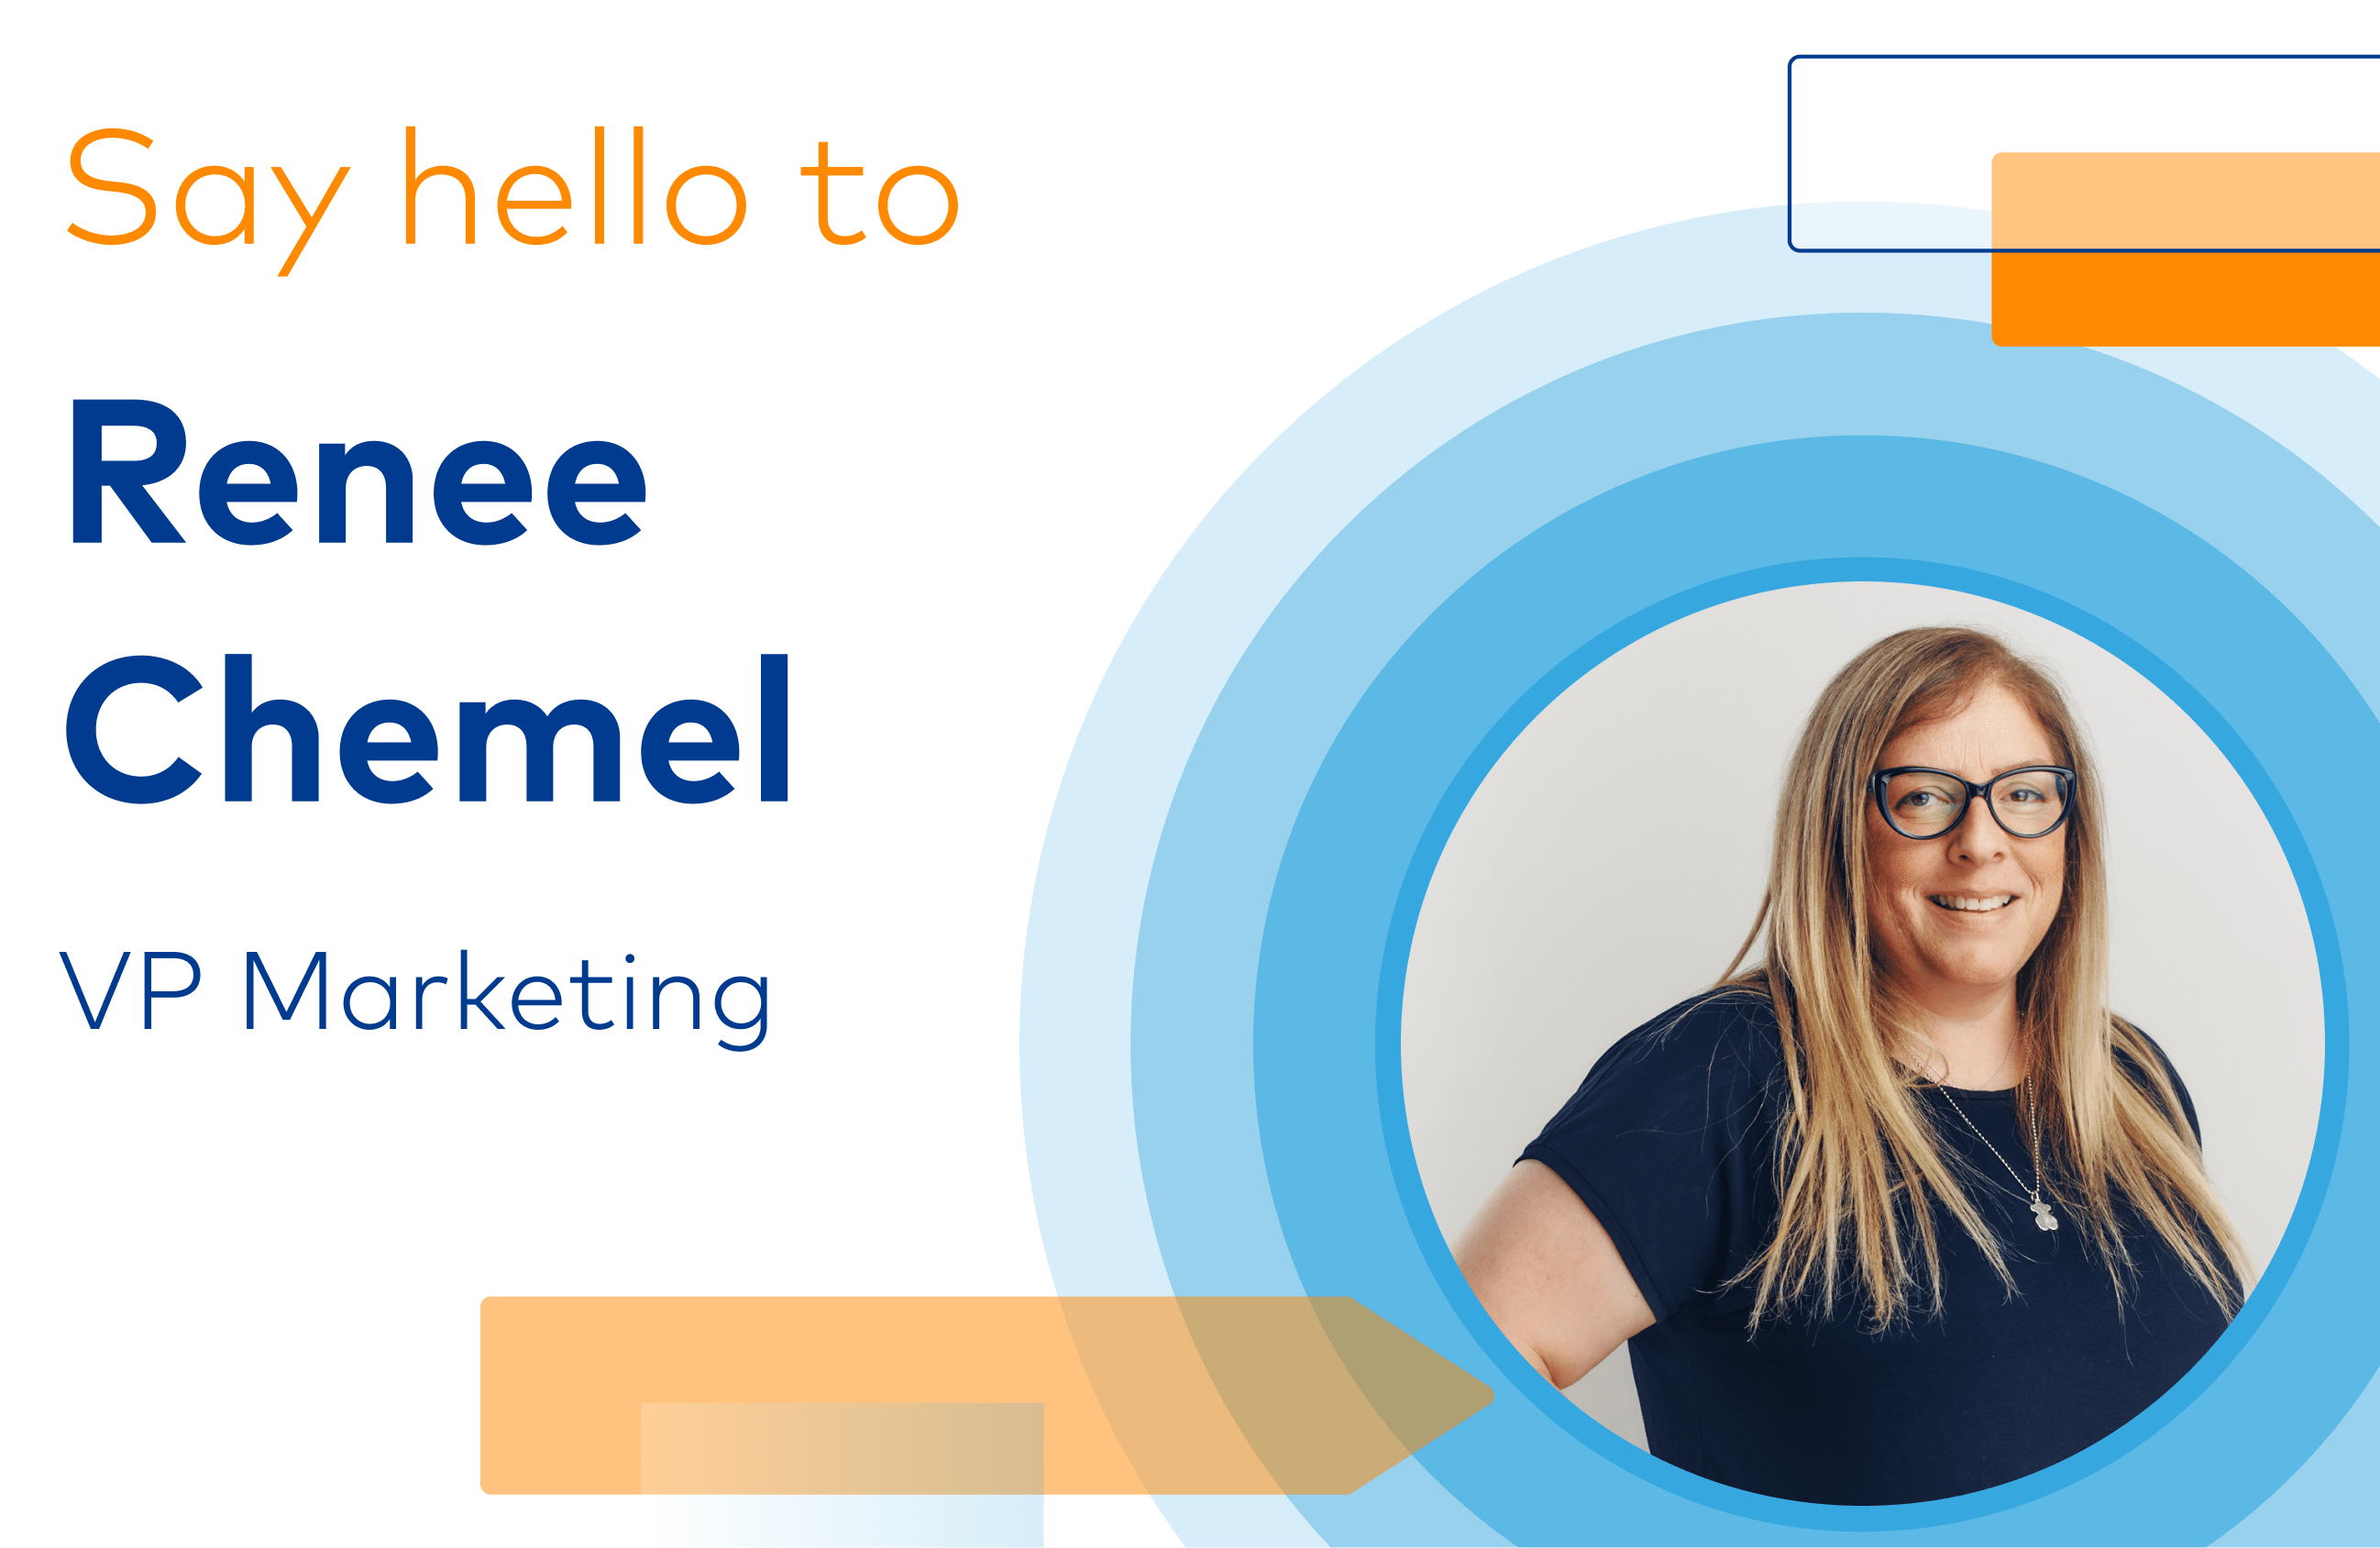 Let’s get to know Proggio’s VP Marketing – Renee Chemel